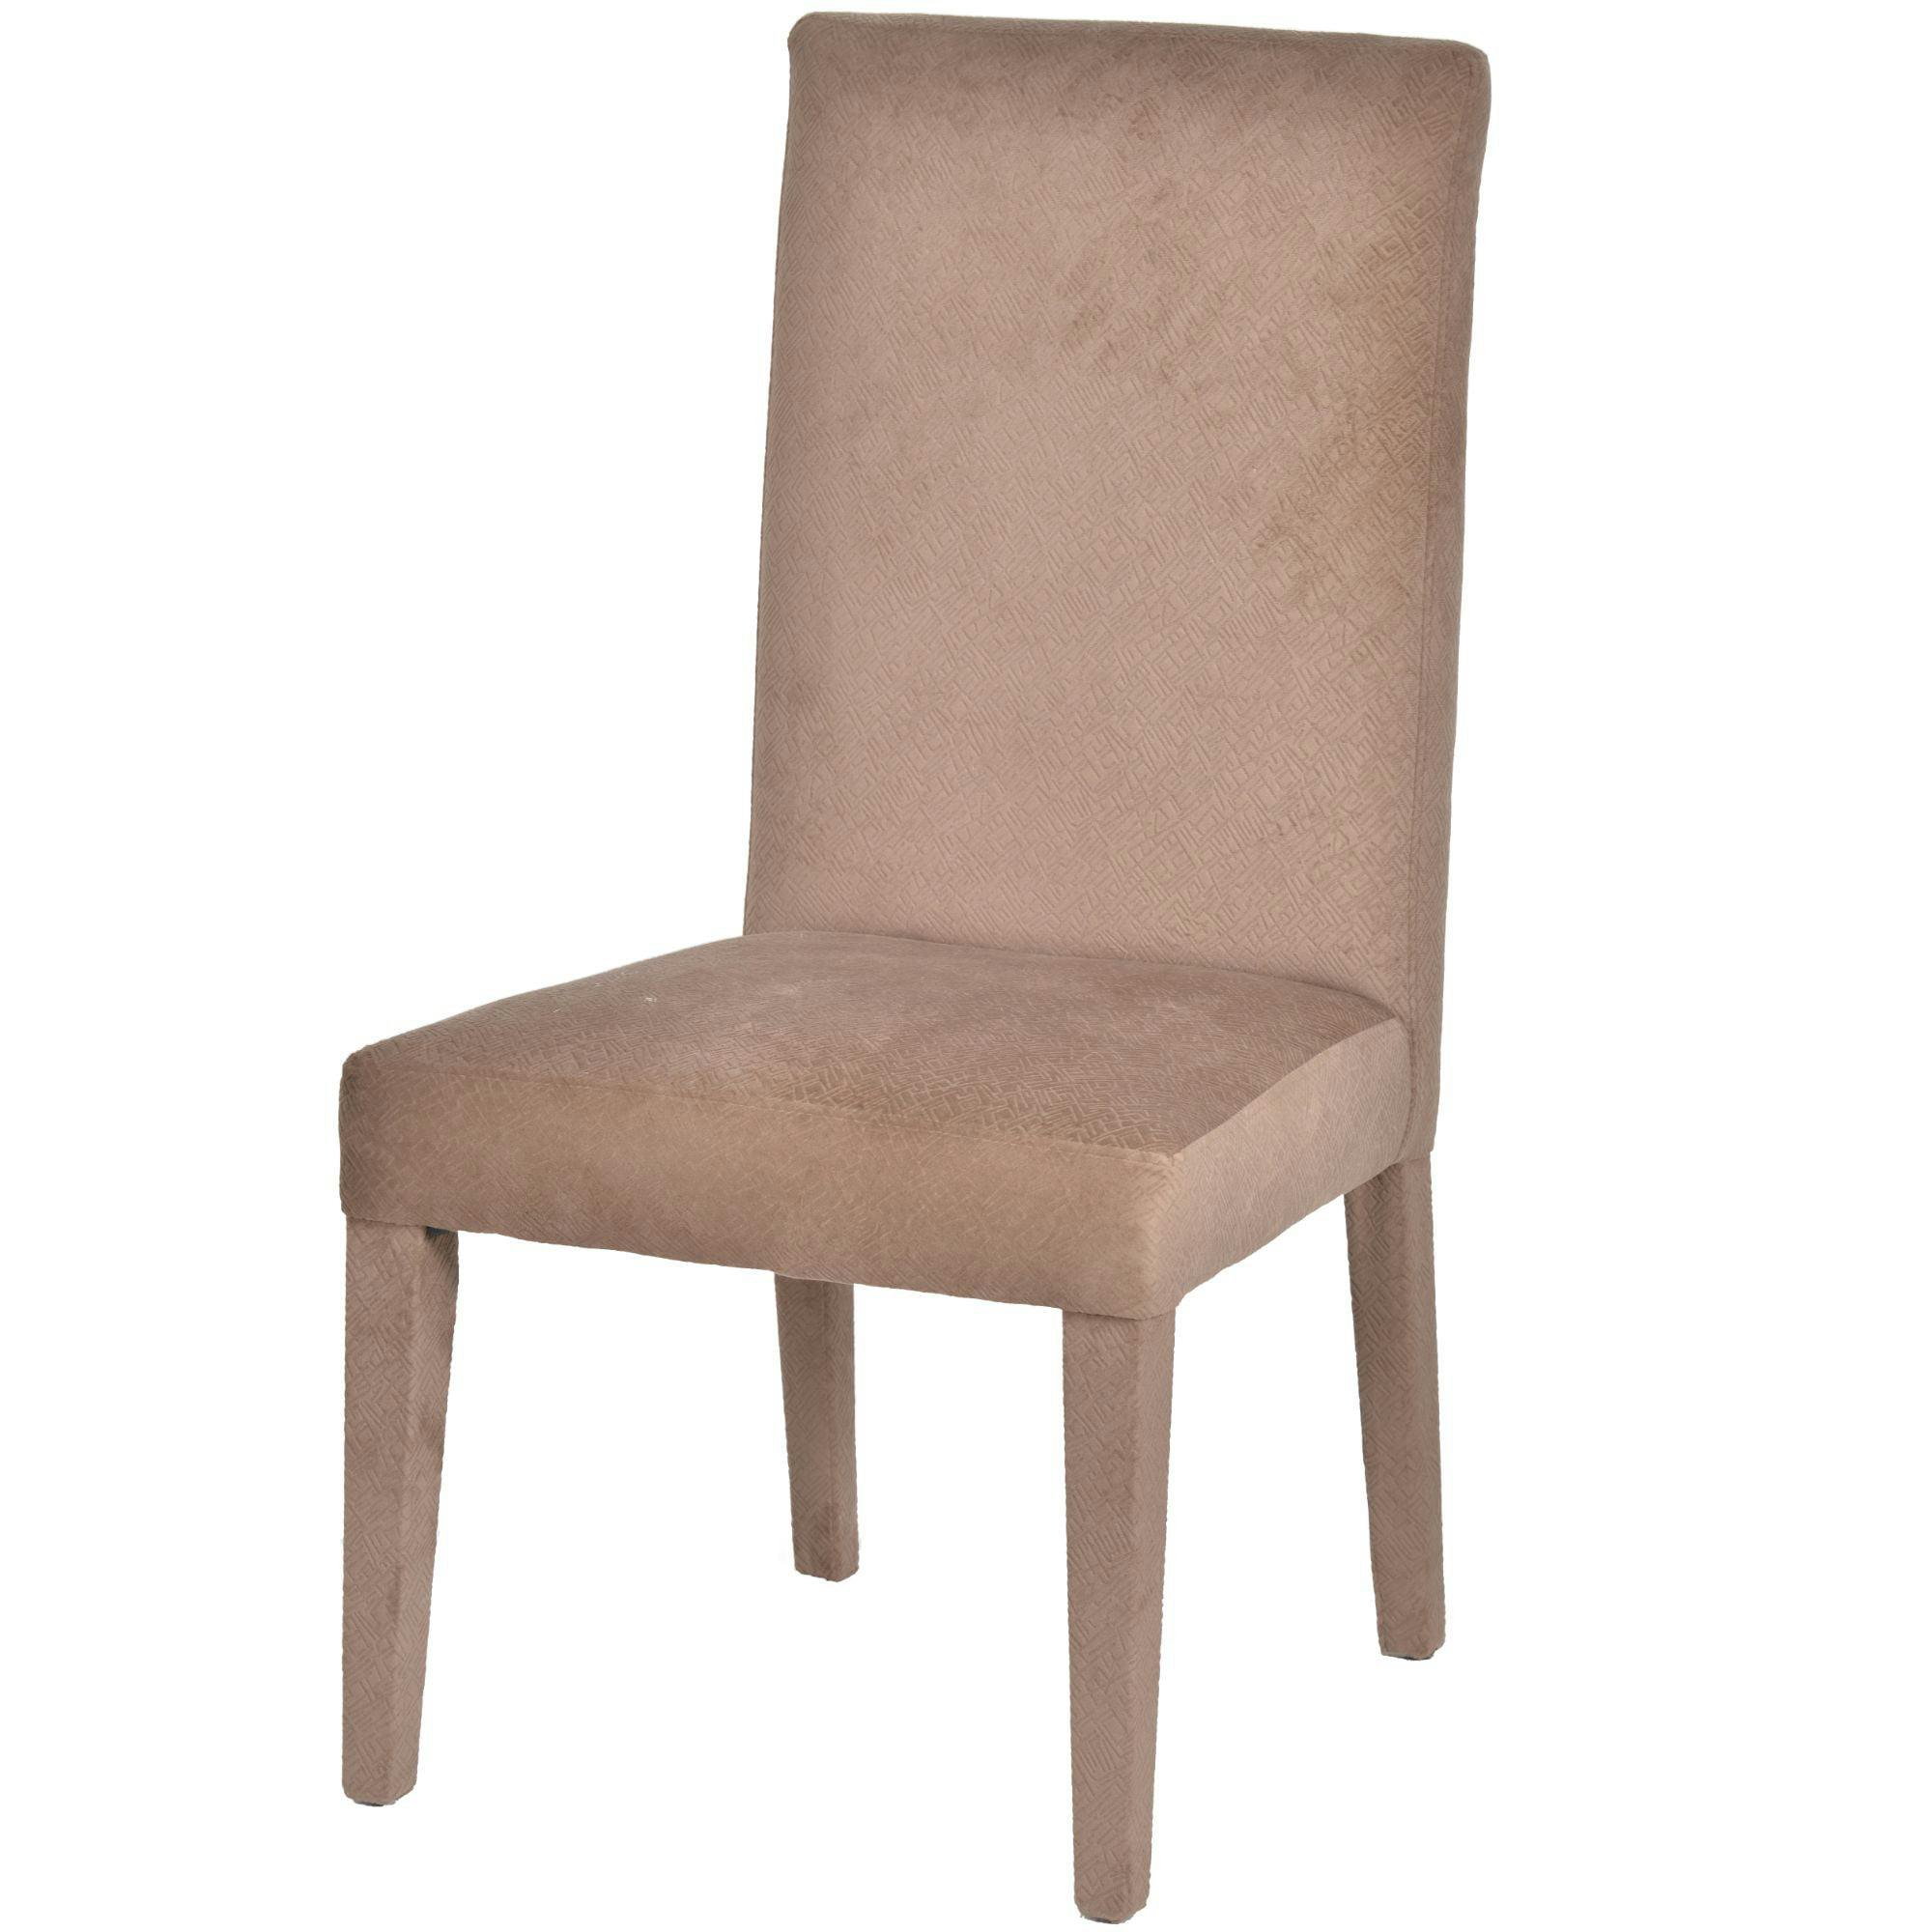 Elegant Belmont 42" Beige Upholstered Wooden Dining Chair